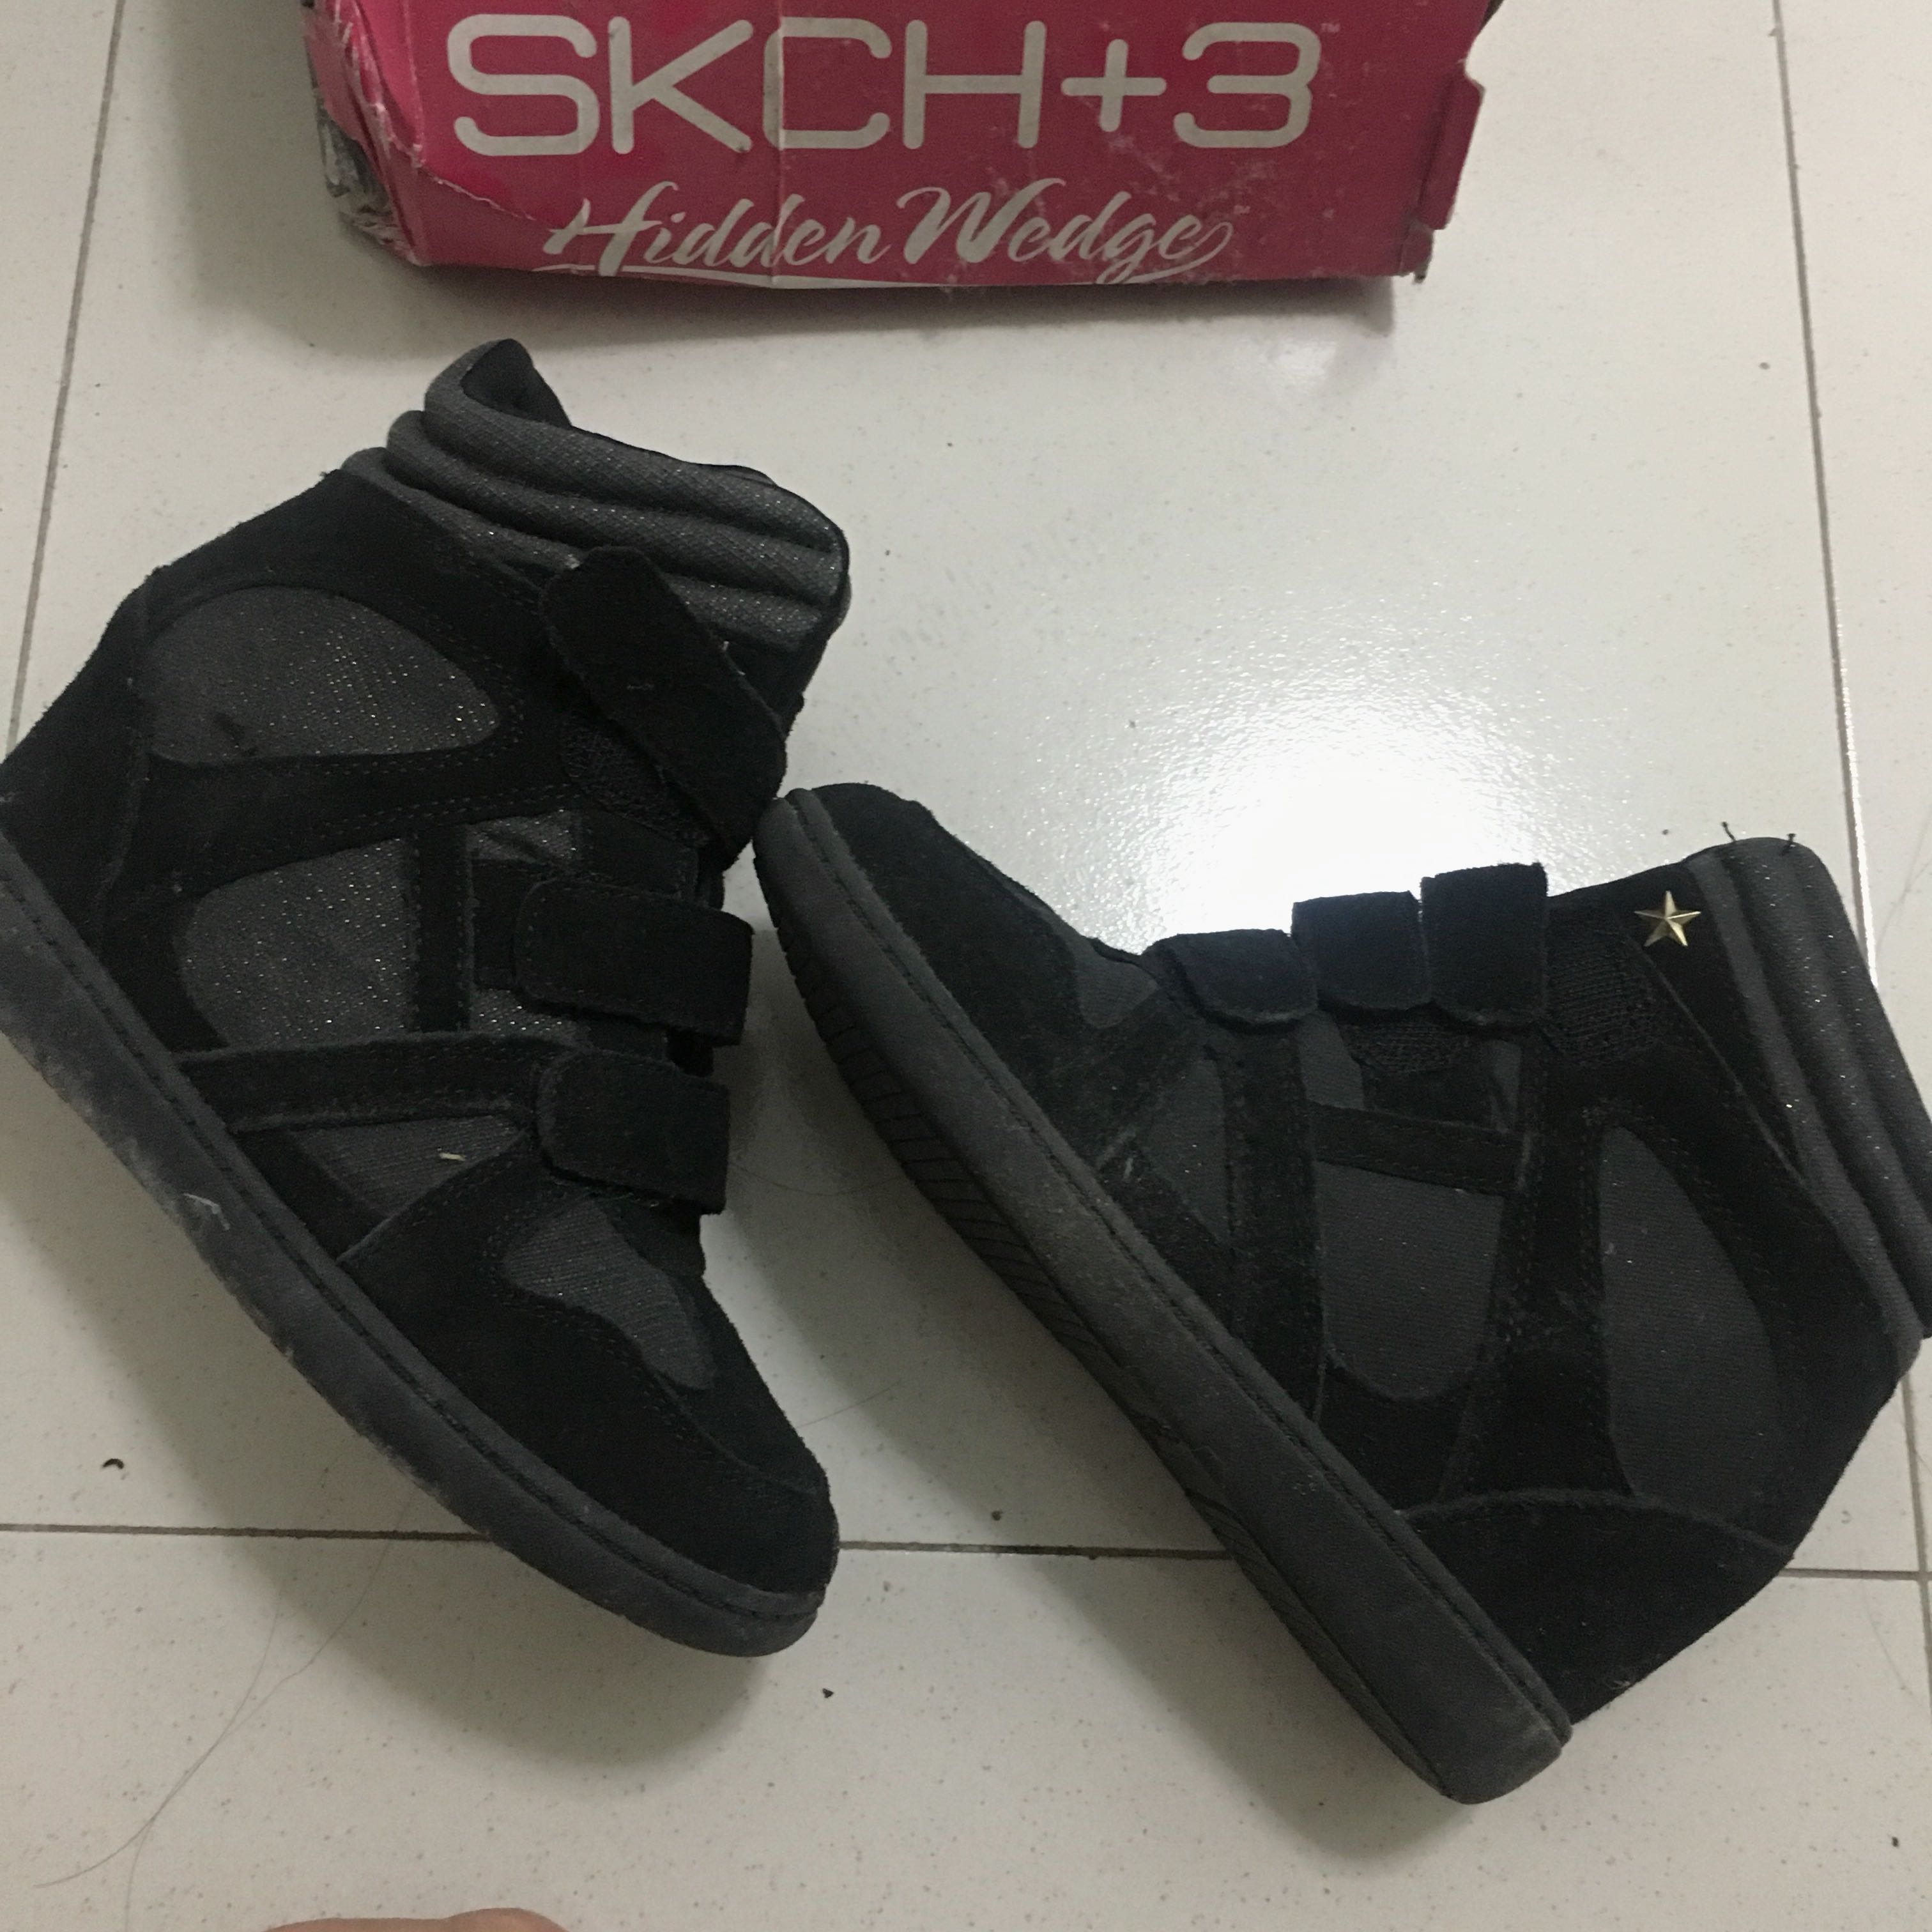 skechers wedge sneakers philippines price